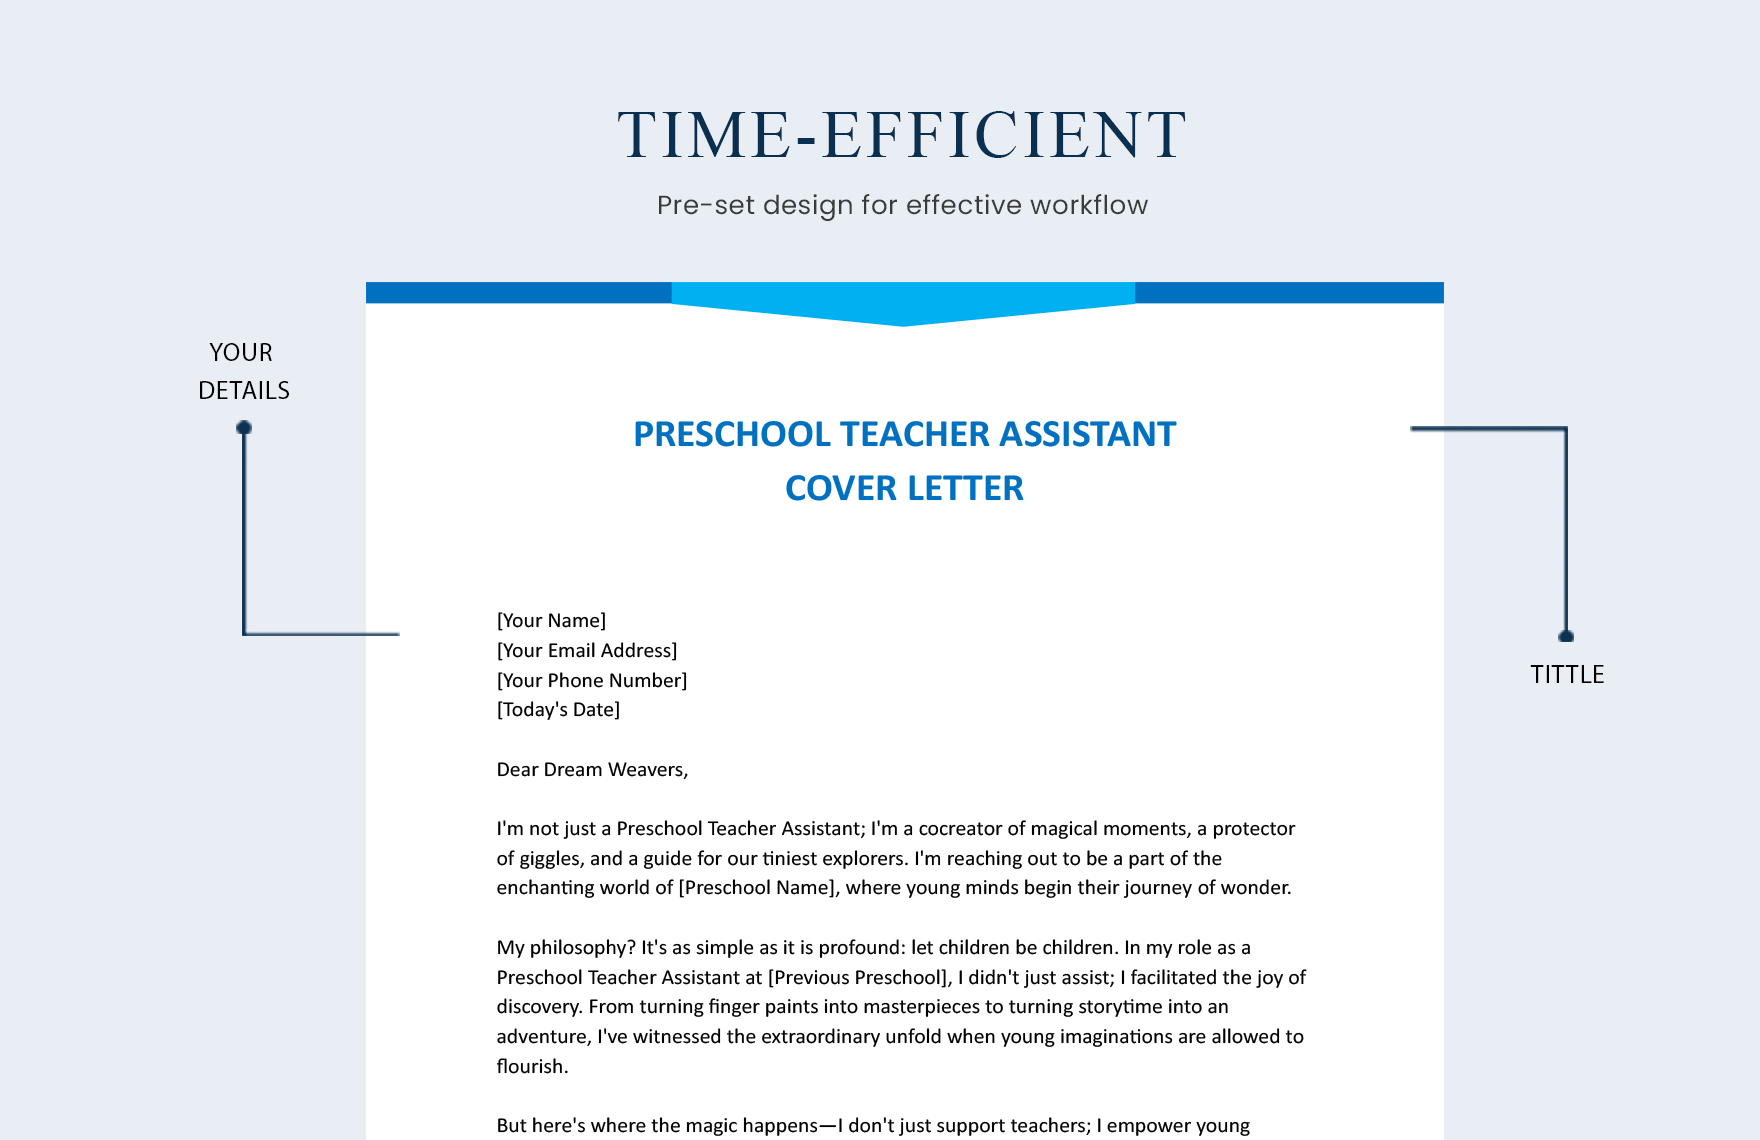 Preschool Teacher Assistant Cover Letter